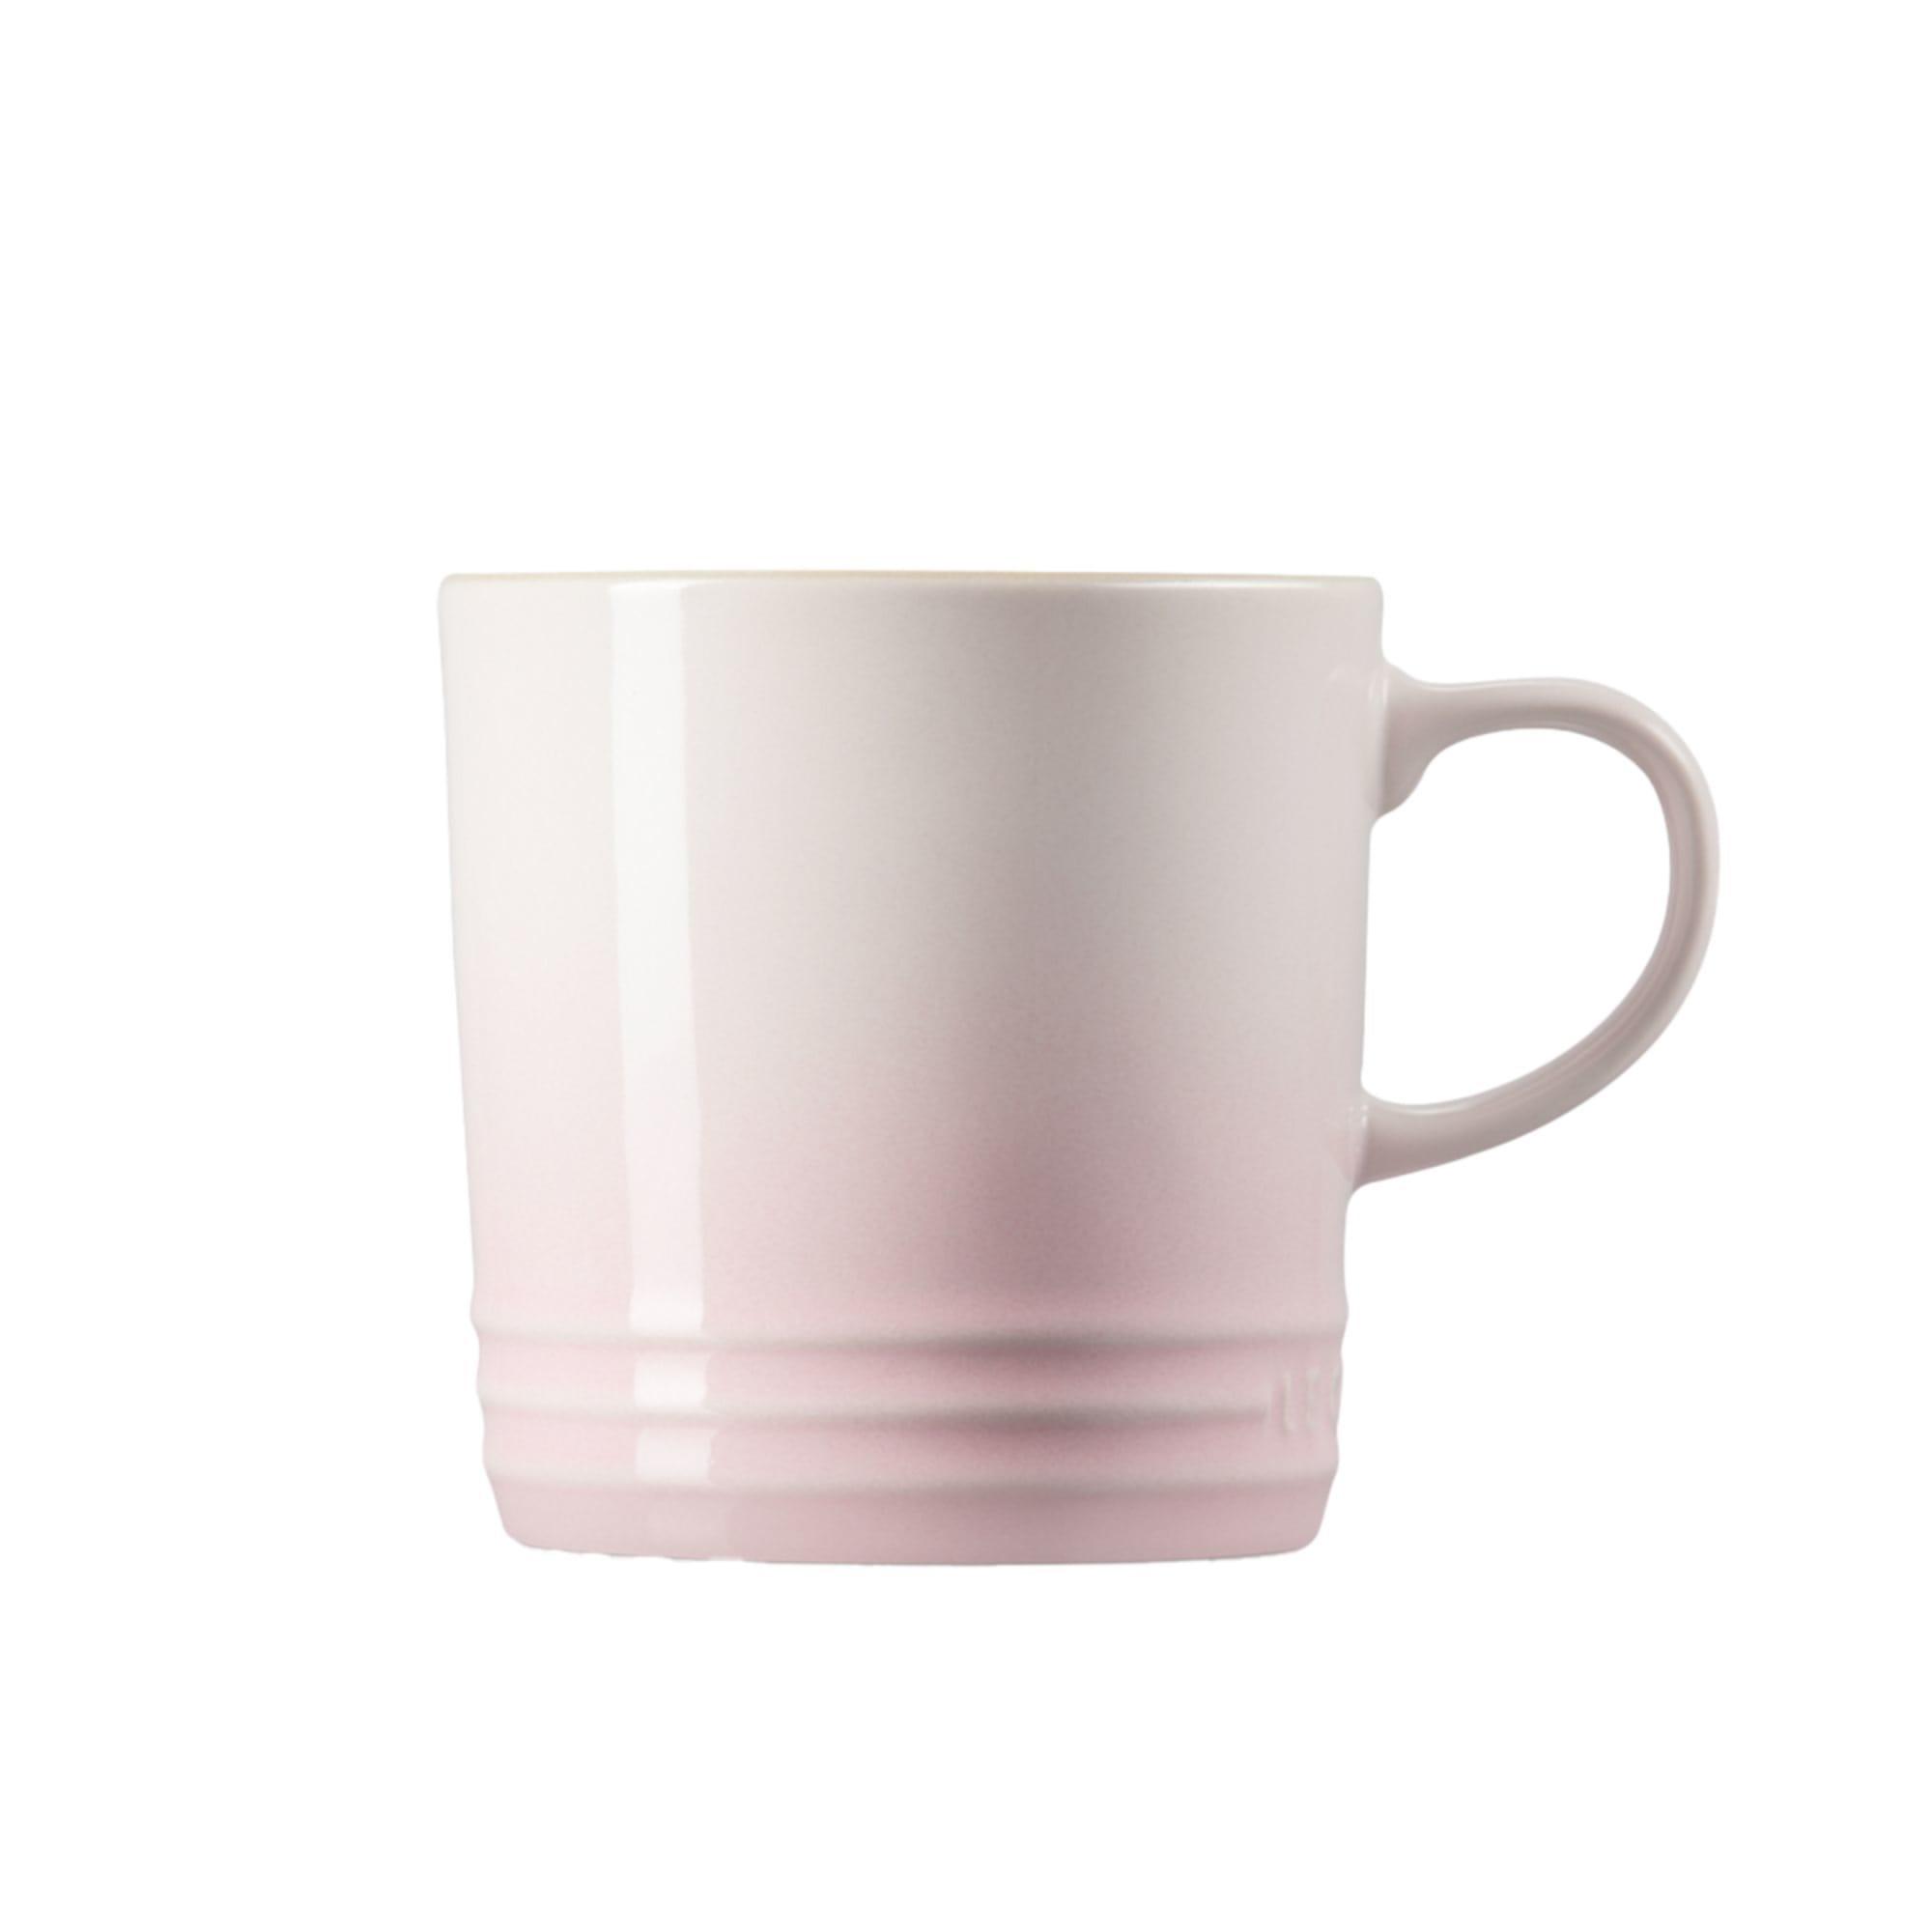 Le Creuset Stoneware Mug 350ml Shell Pink Image 3